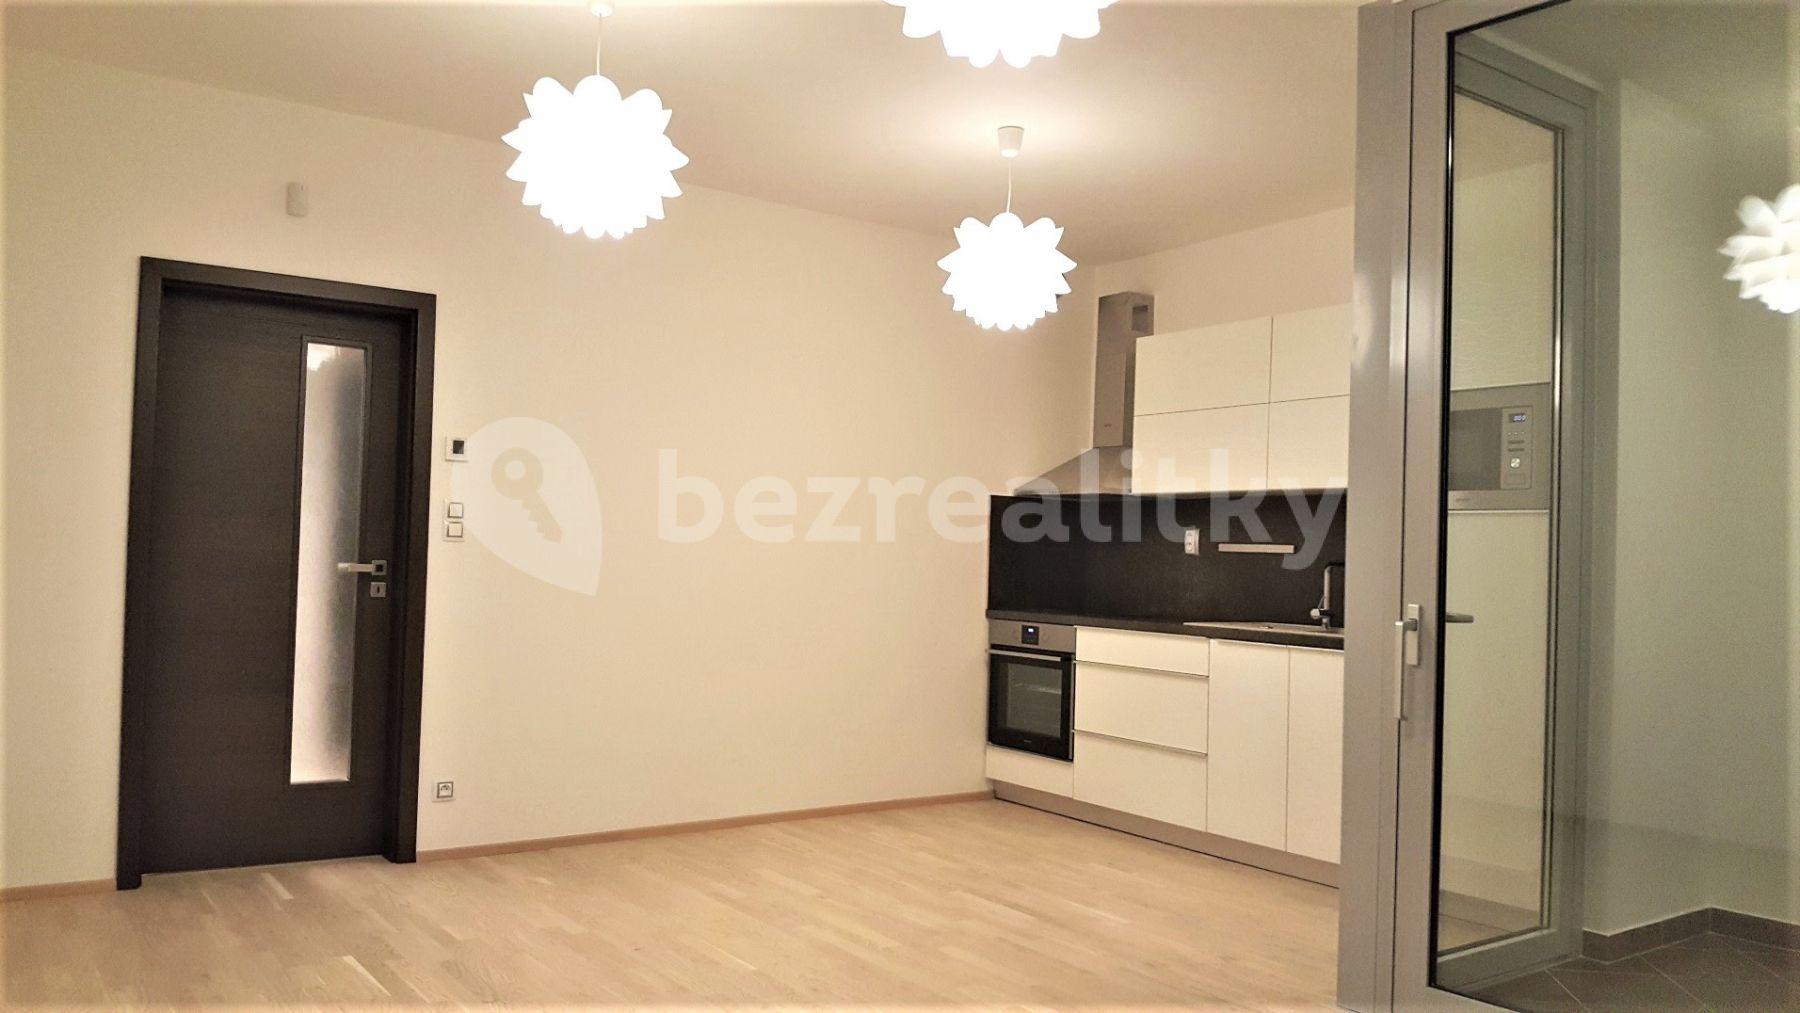 1 bedroom flat to rent, 35 m², Olšanská, Prague, Prague